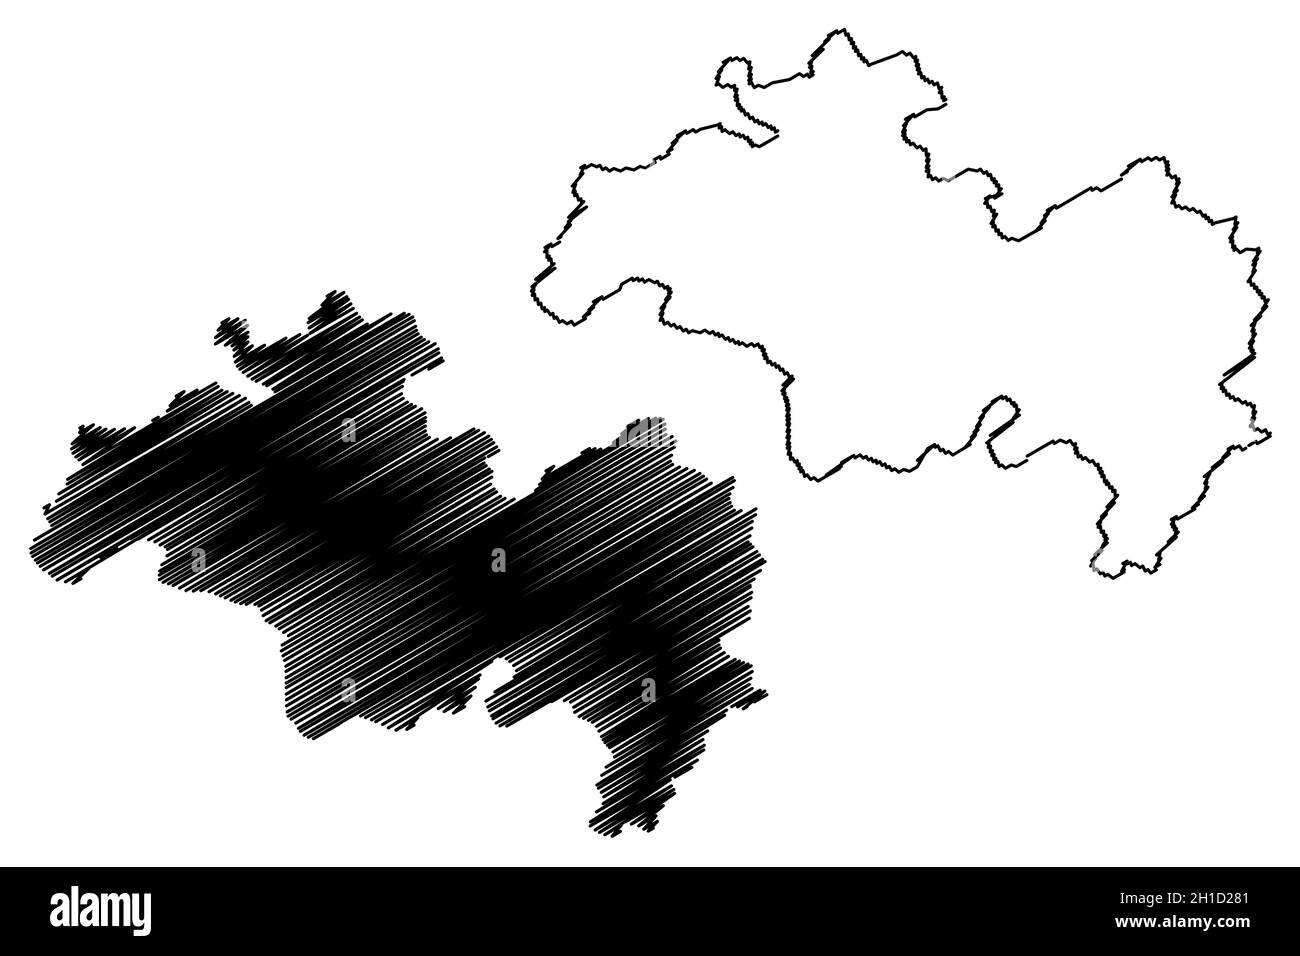 Malerkotla district (Punjab State, Republic of India) map vector illustration, scribble sketch Malerkotla map Stock Vector